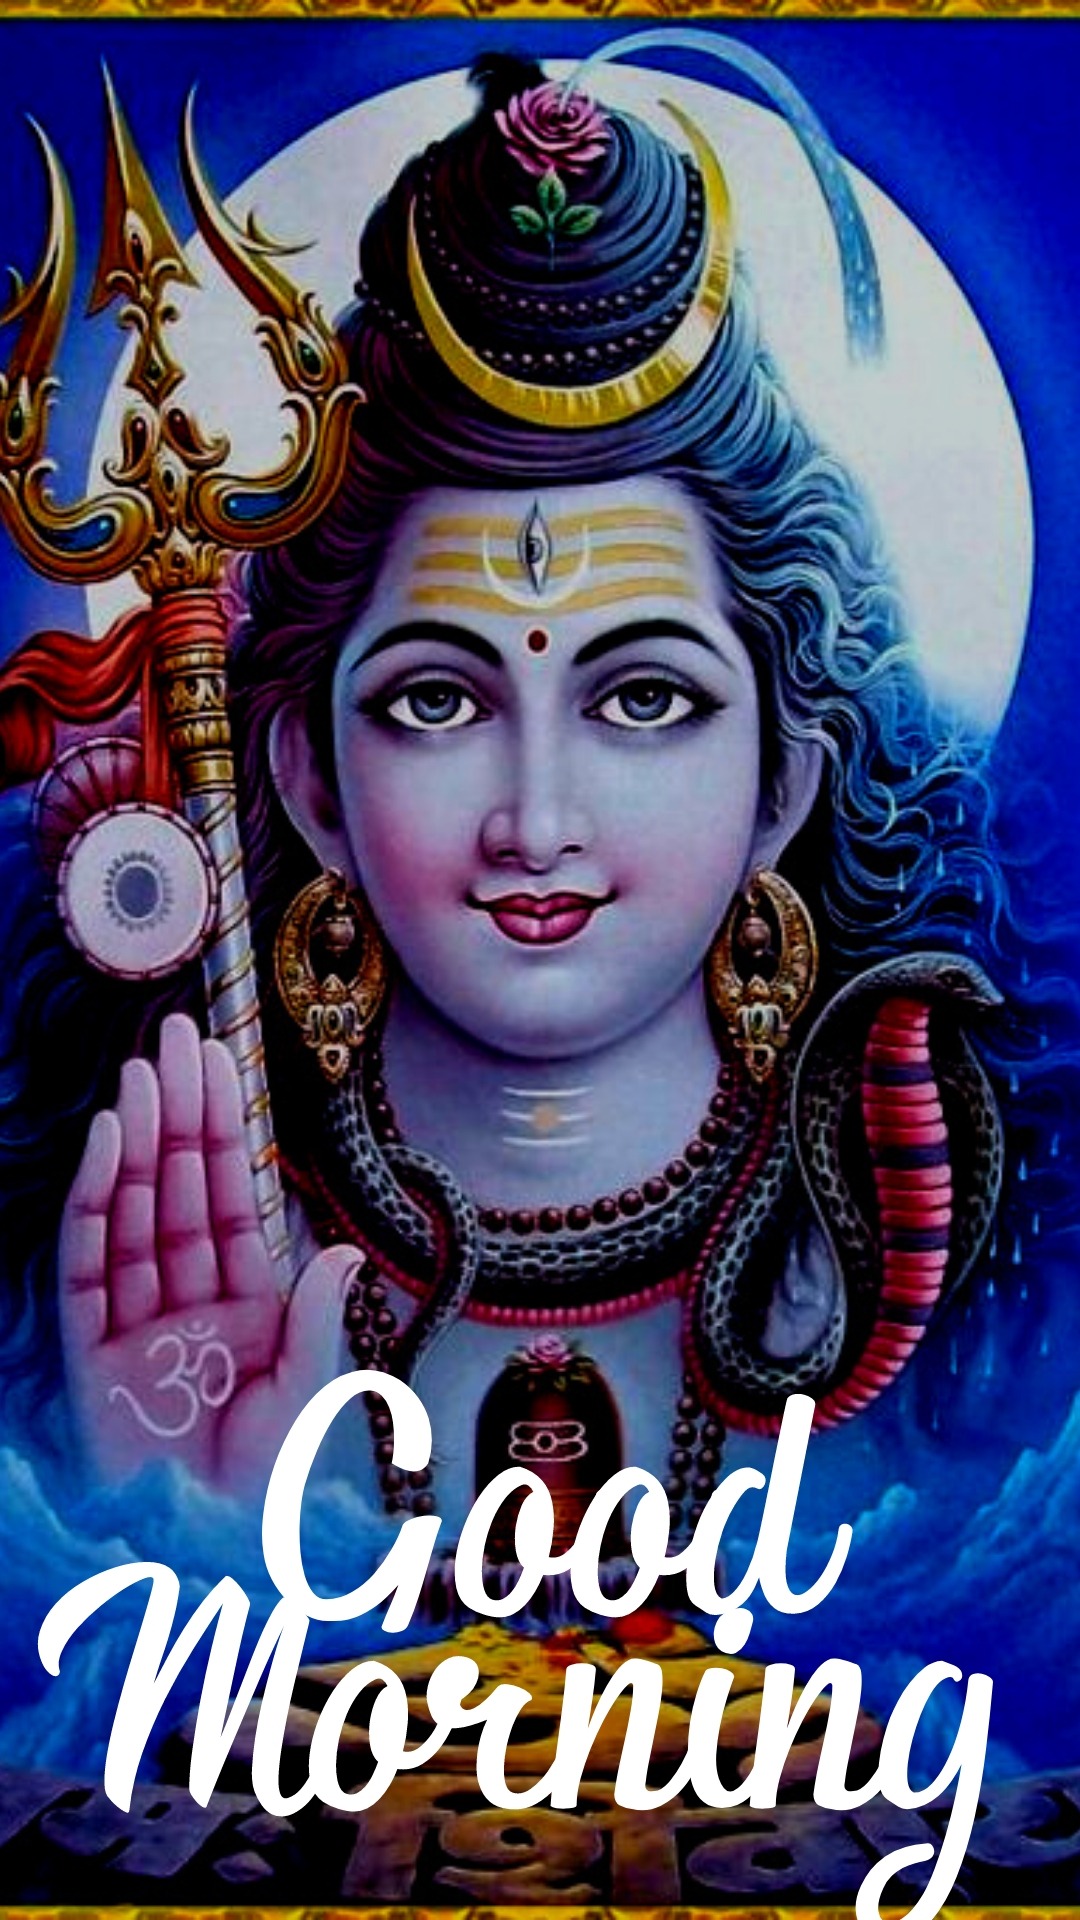 Good morning hindu god images